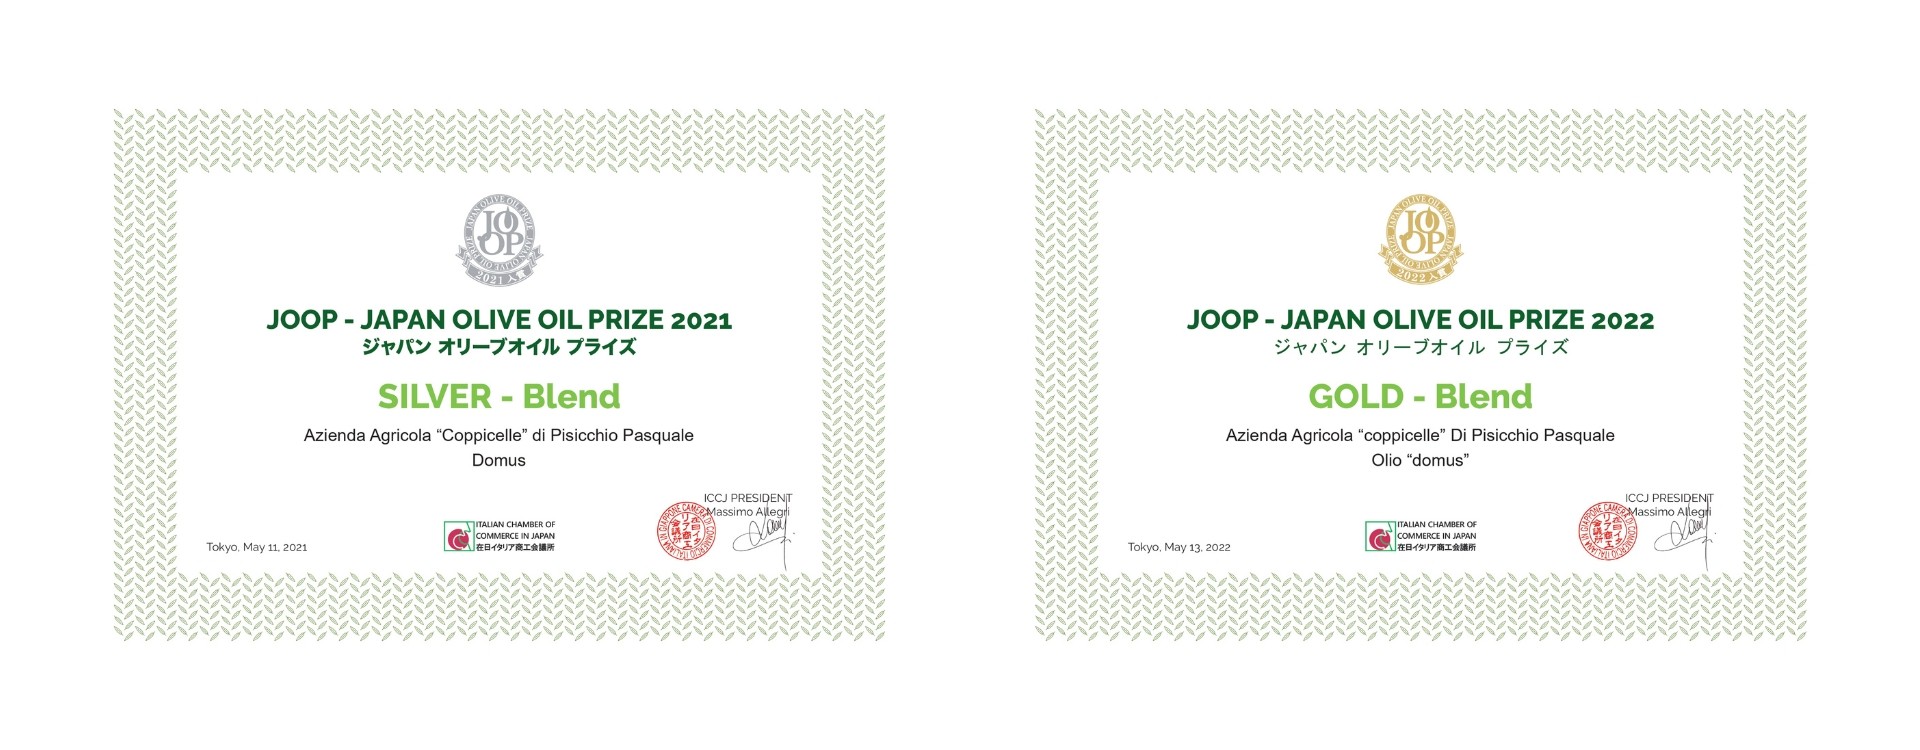 Joop - Japan Olice Oil Prize 2021